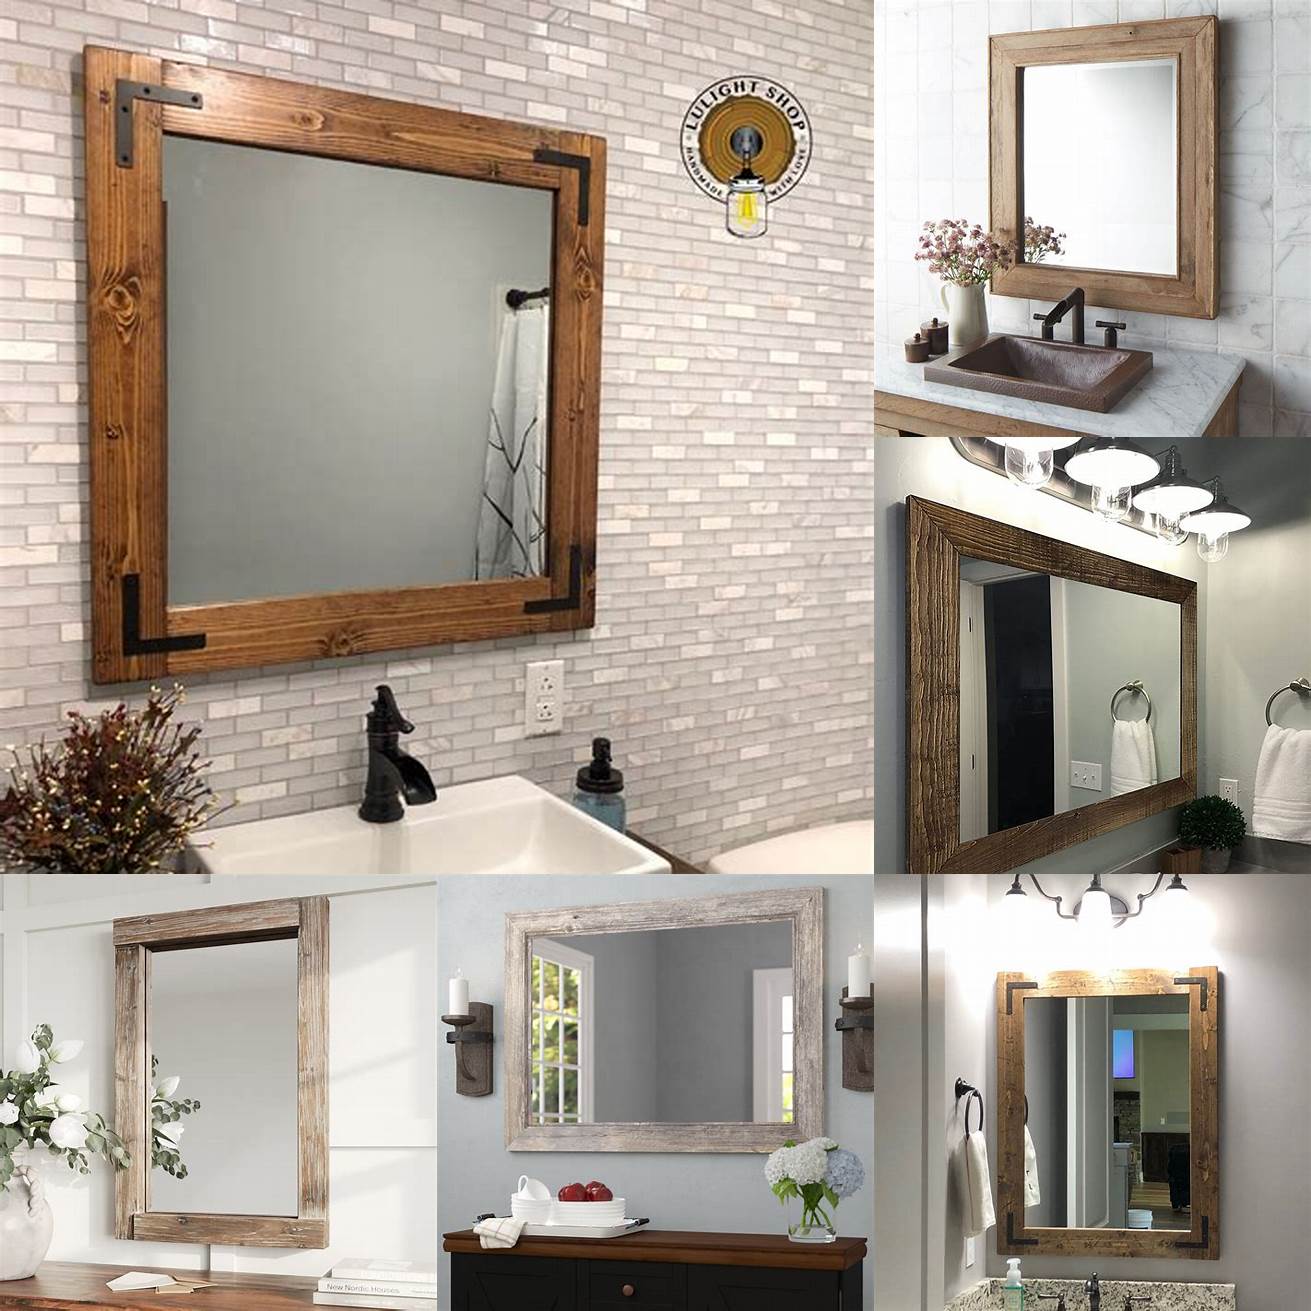 Rustic framed bathroom mirror with distressed wood frame